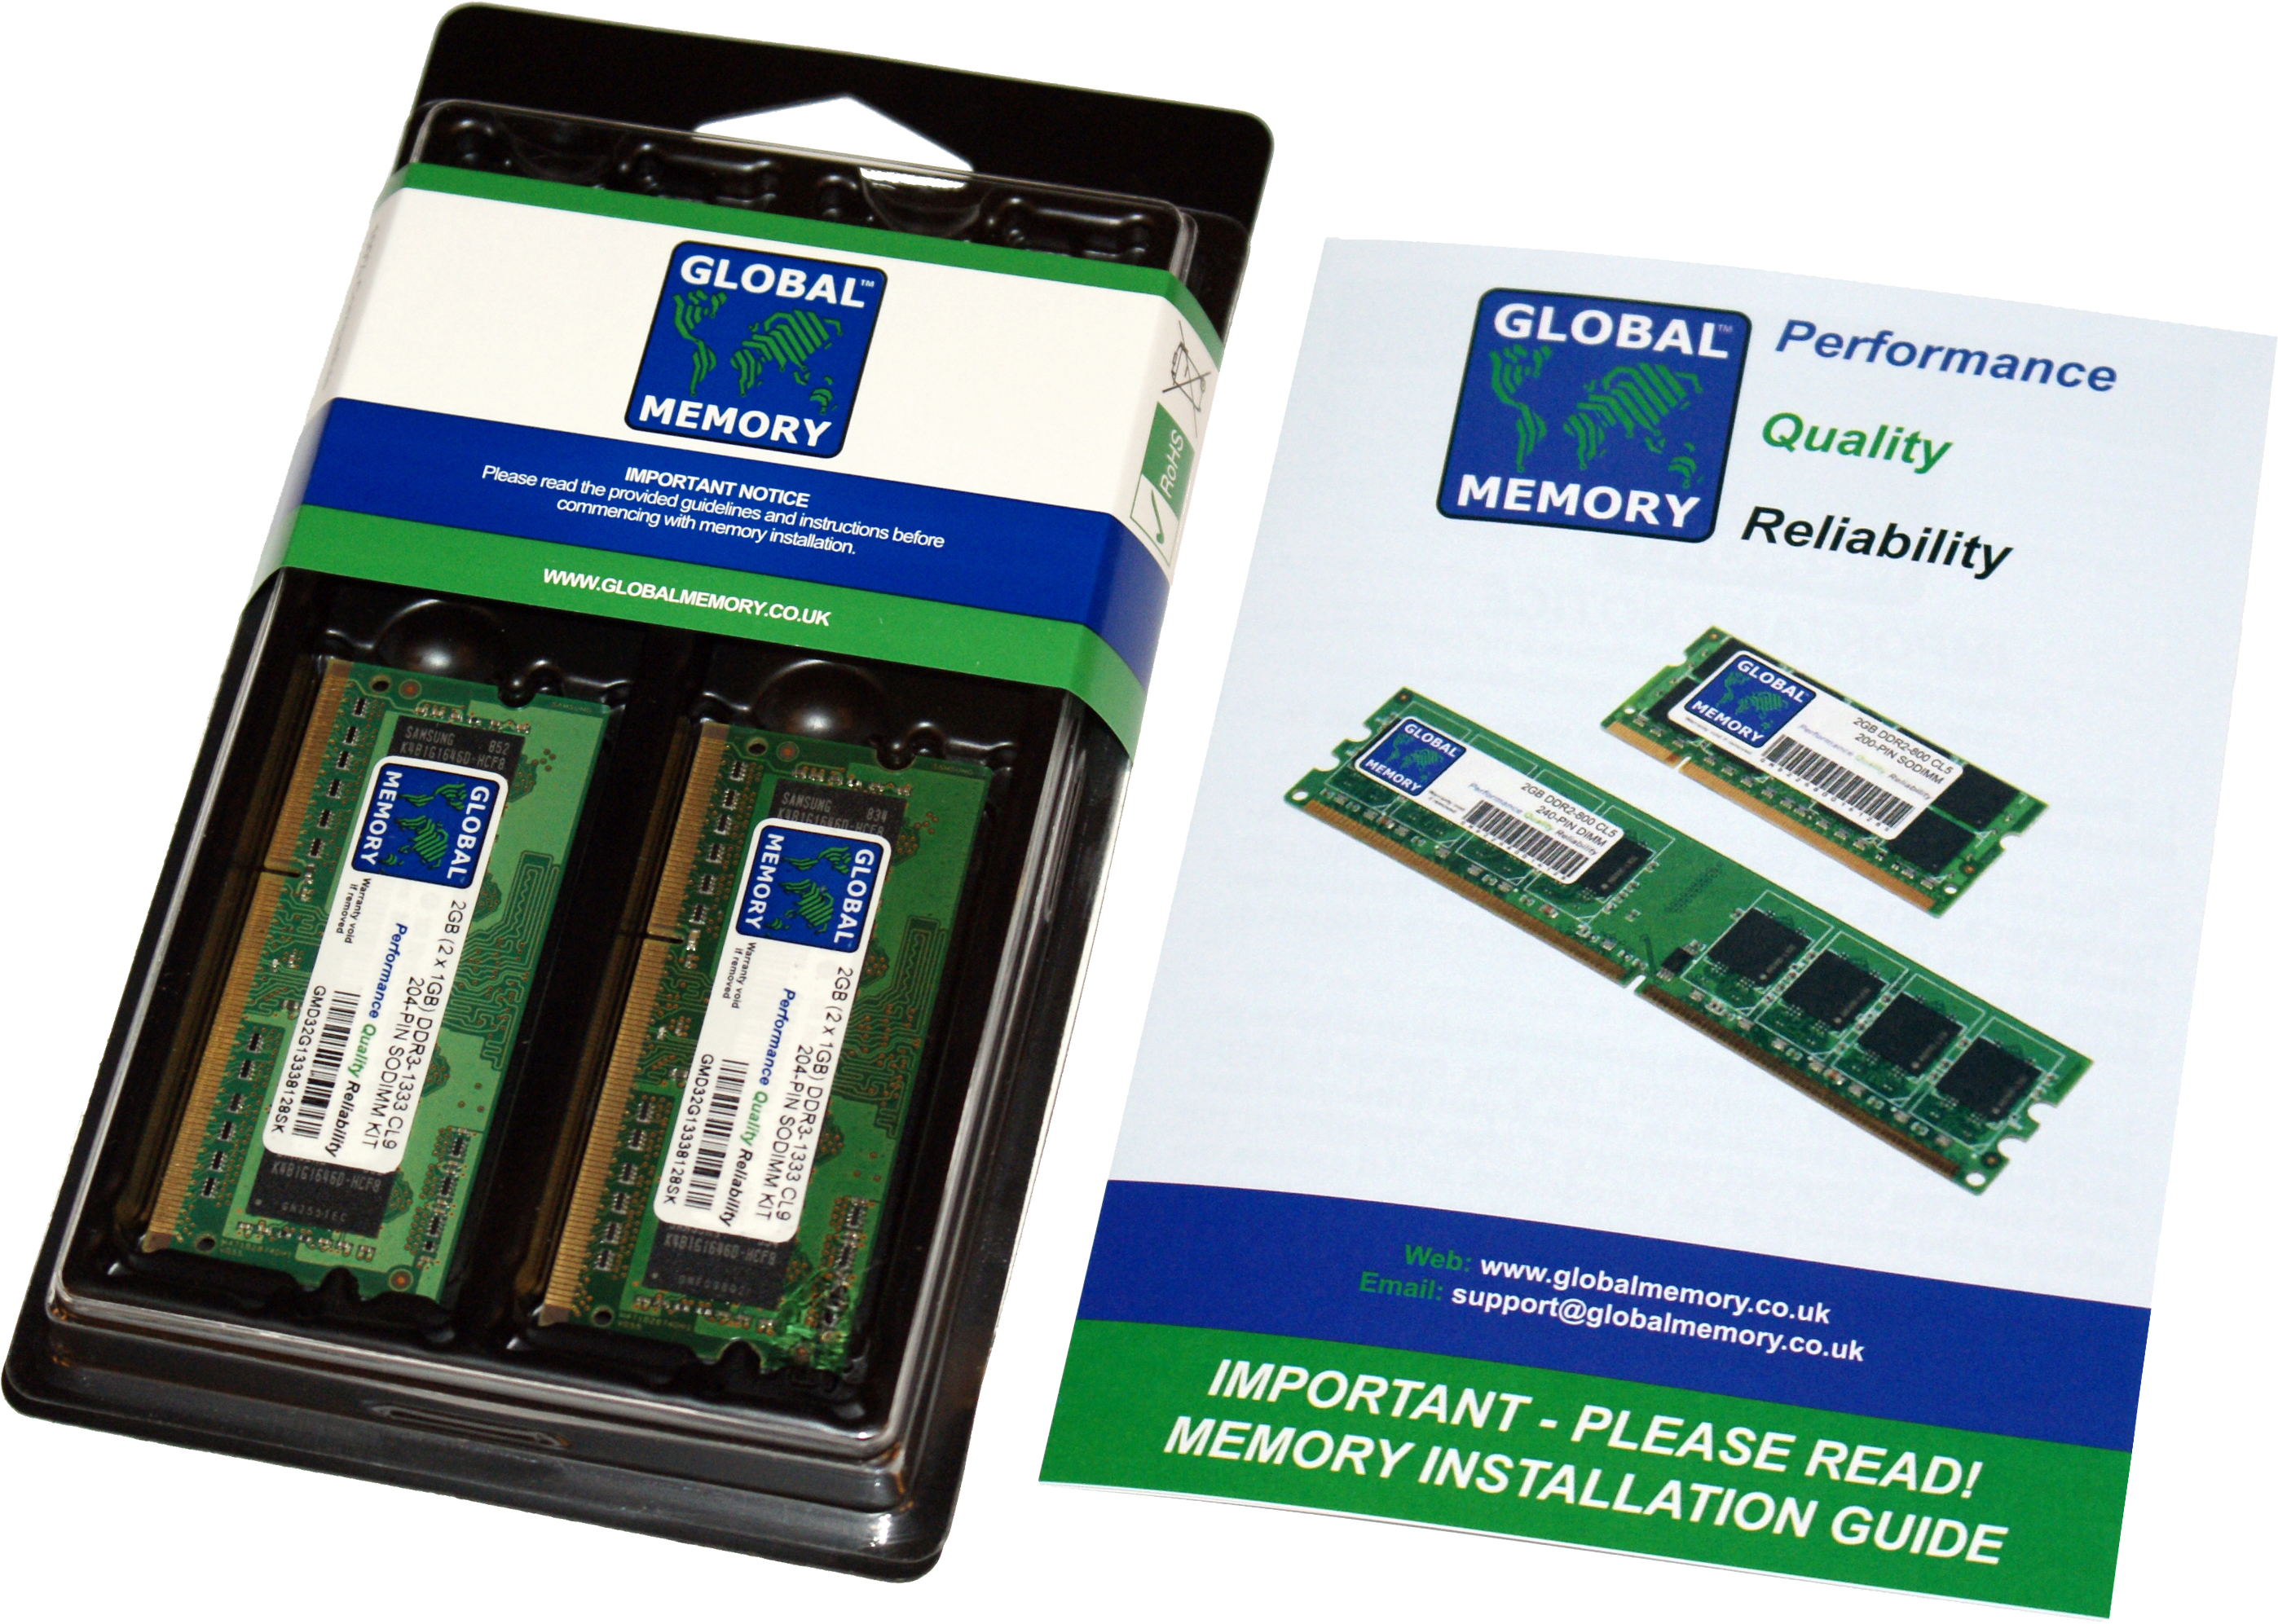 8GB (2 x 4GB) DDR4 2133MHz PC4-17000 260-PIN SODIMM MEMORY RAM KIT FOR TOSHIBA LAPTOPS/NOTEBOOKS